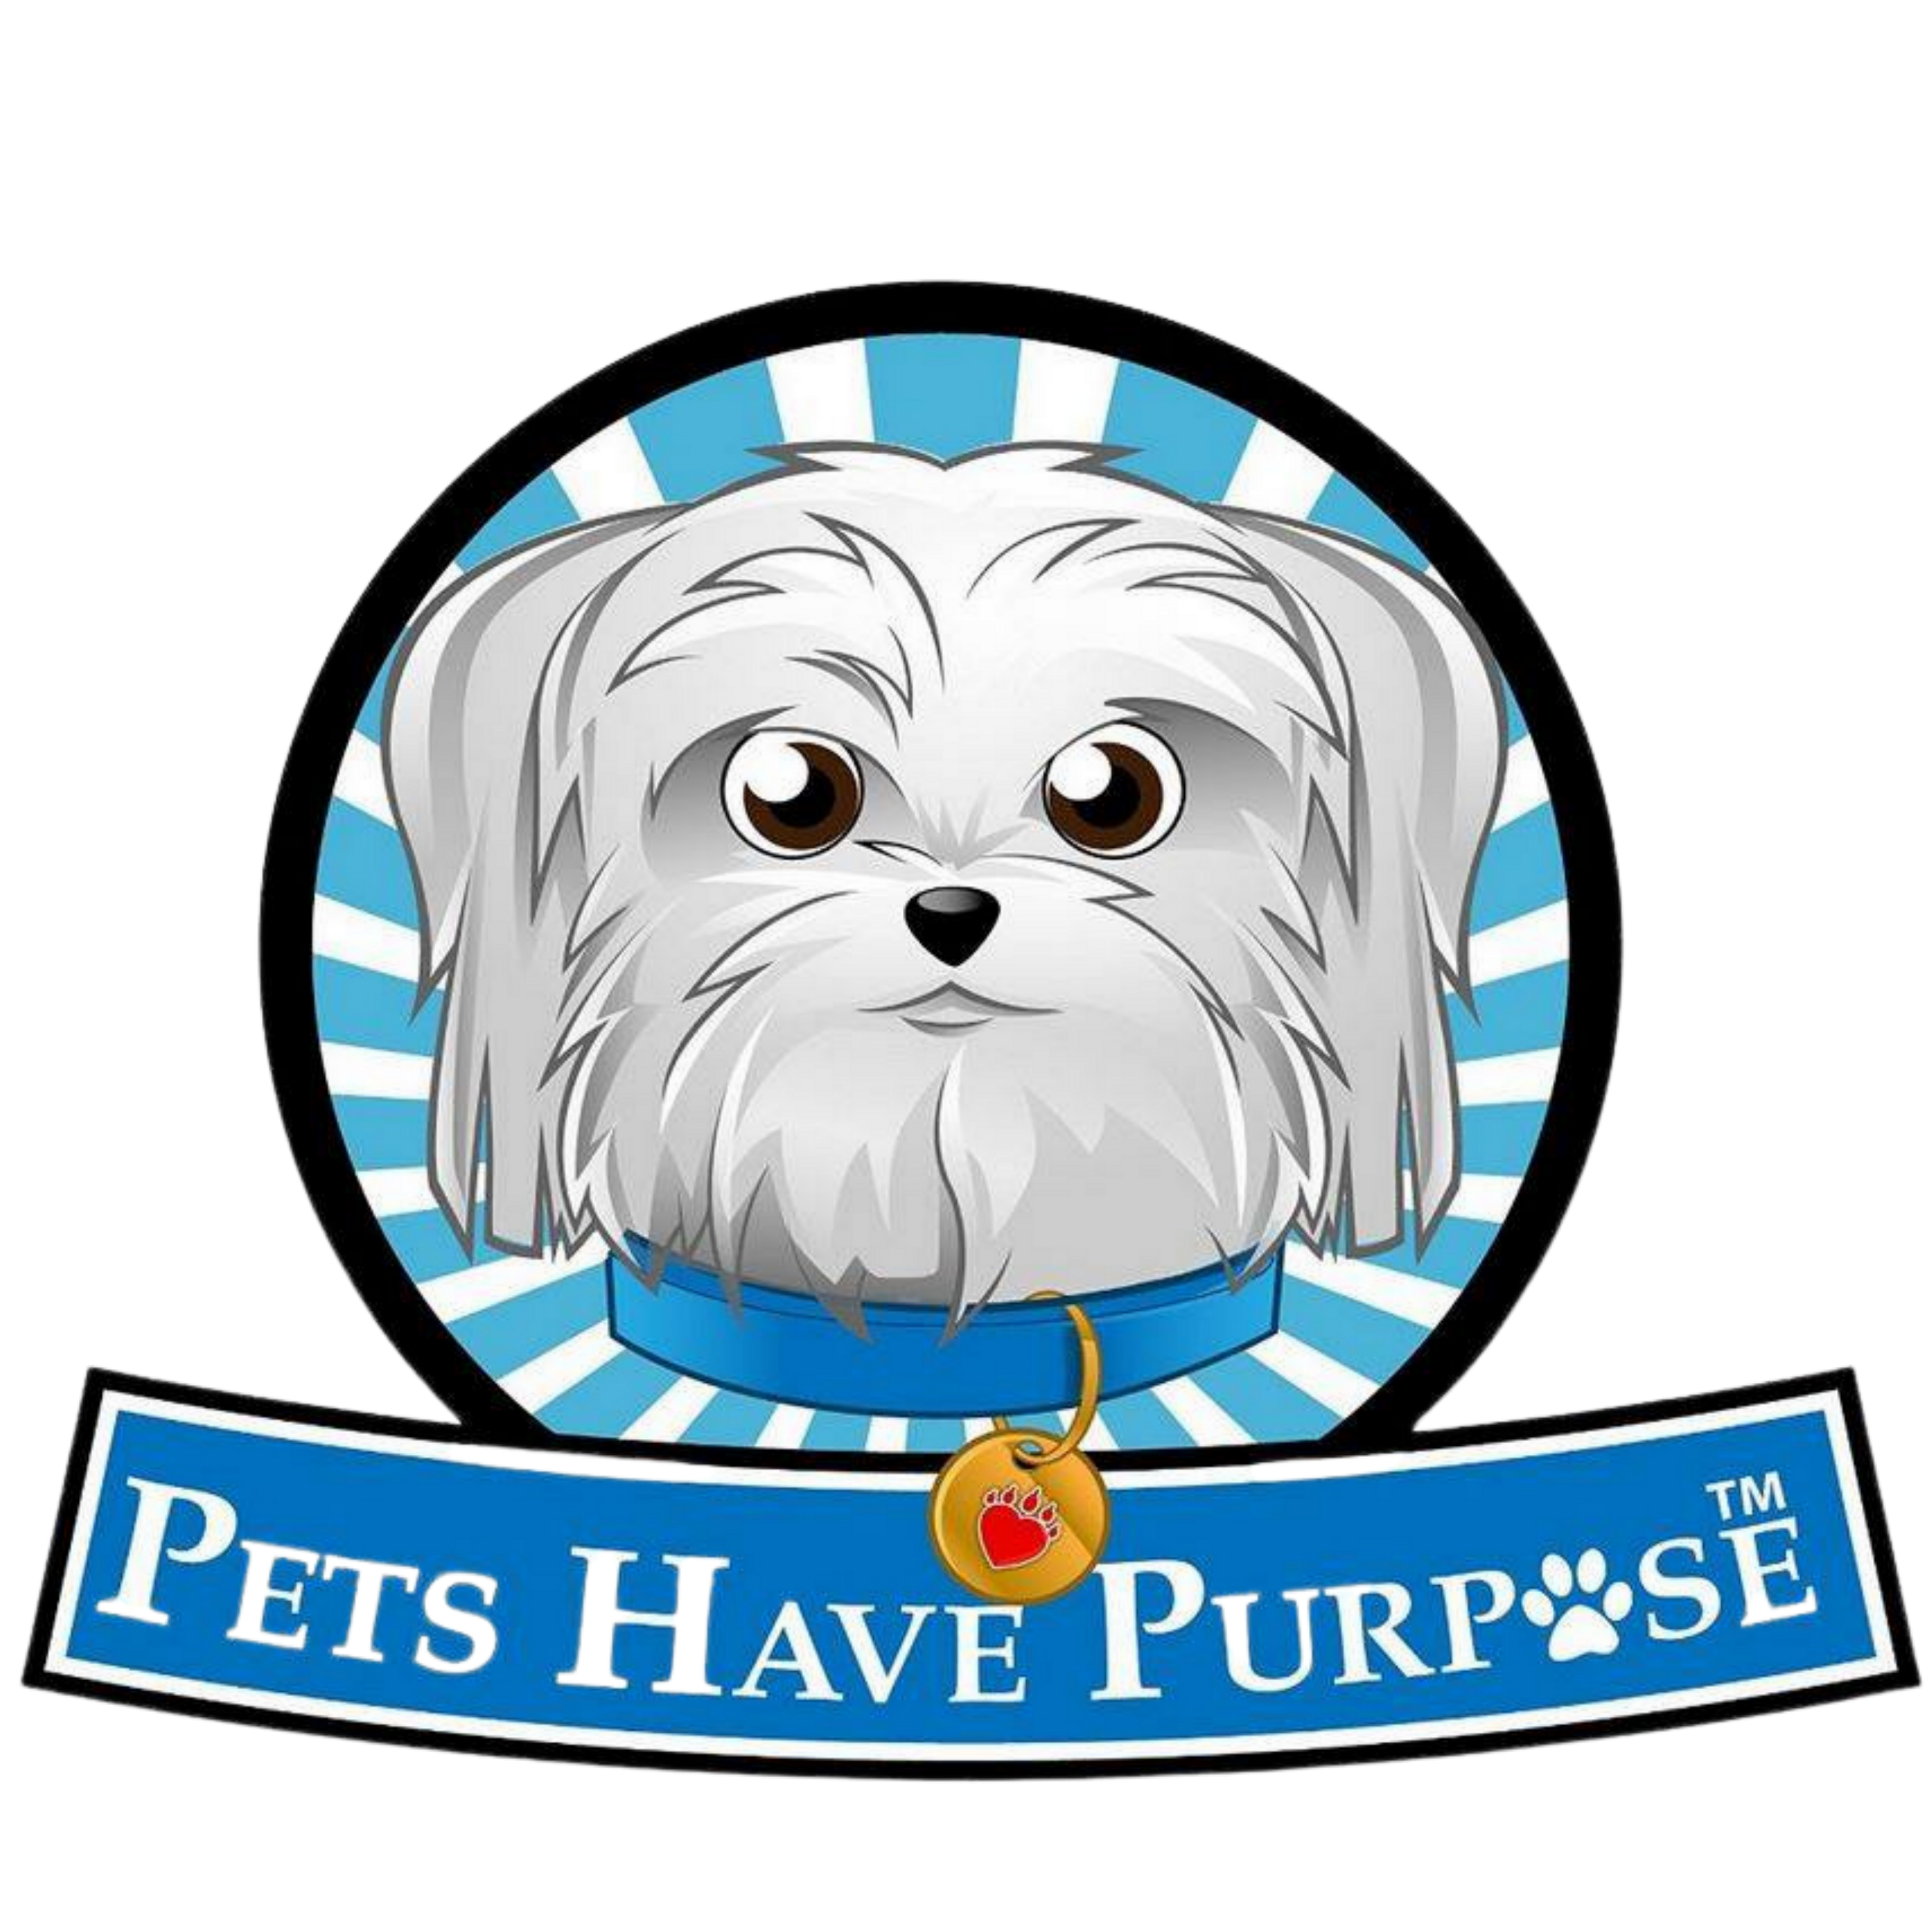 Pets Have Purpose